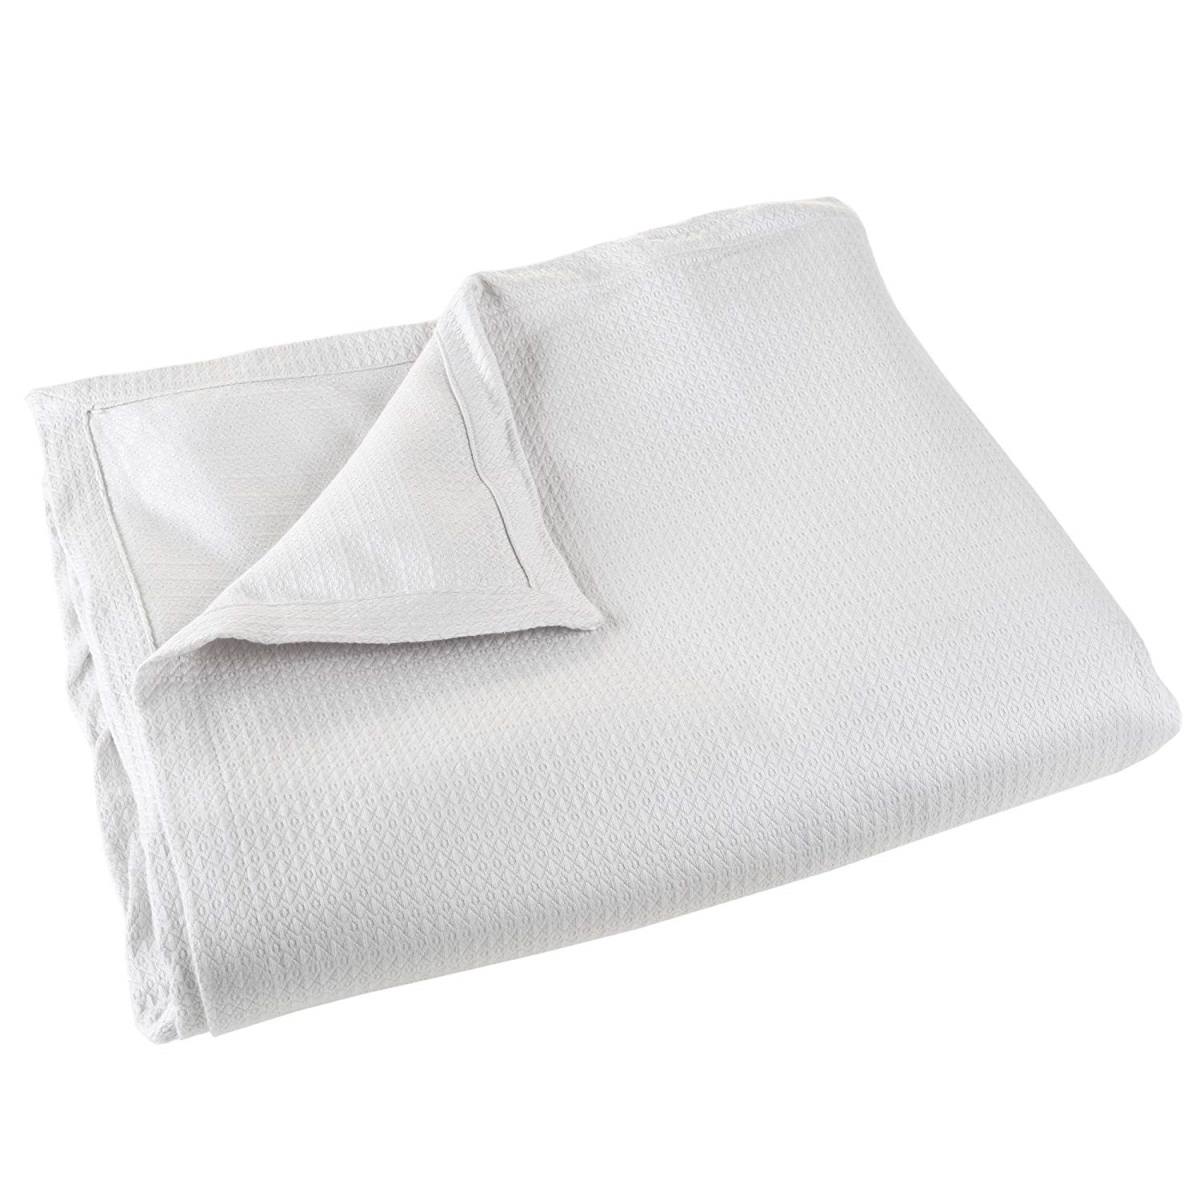 61a-43364 Soft Breathable 100 Percent Cotton Blanket, Platinum - Twin Size